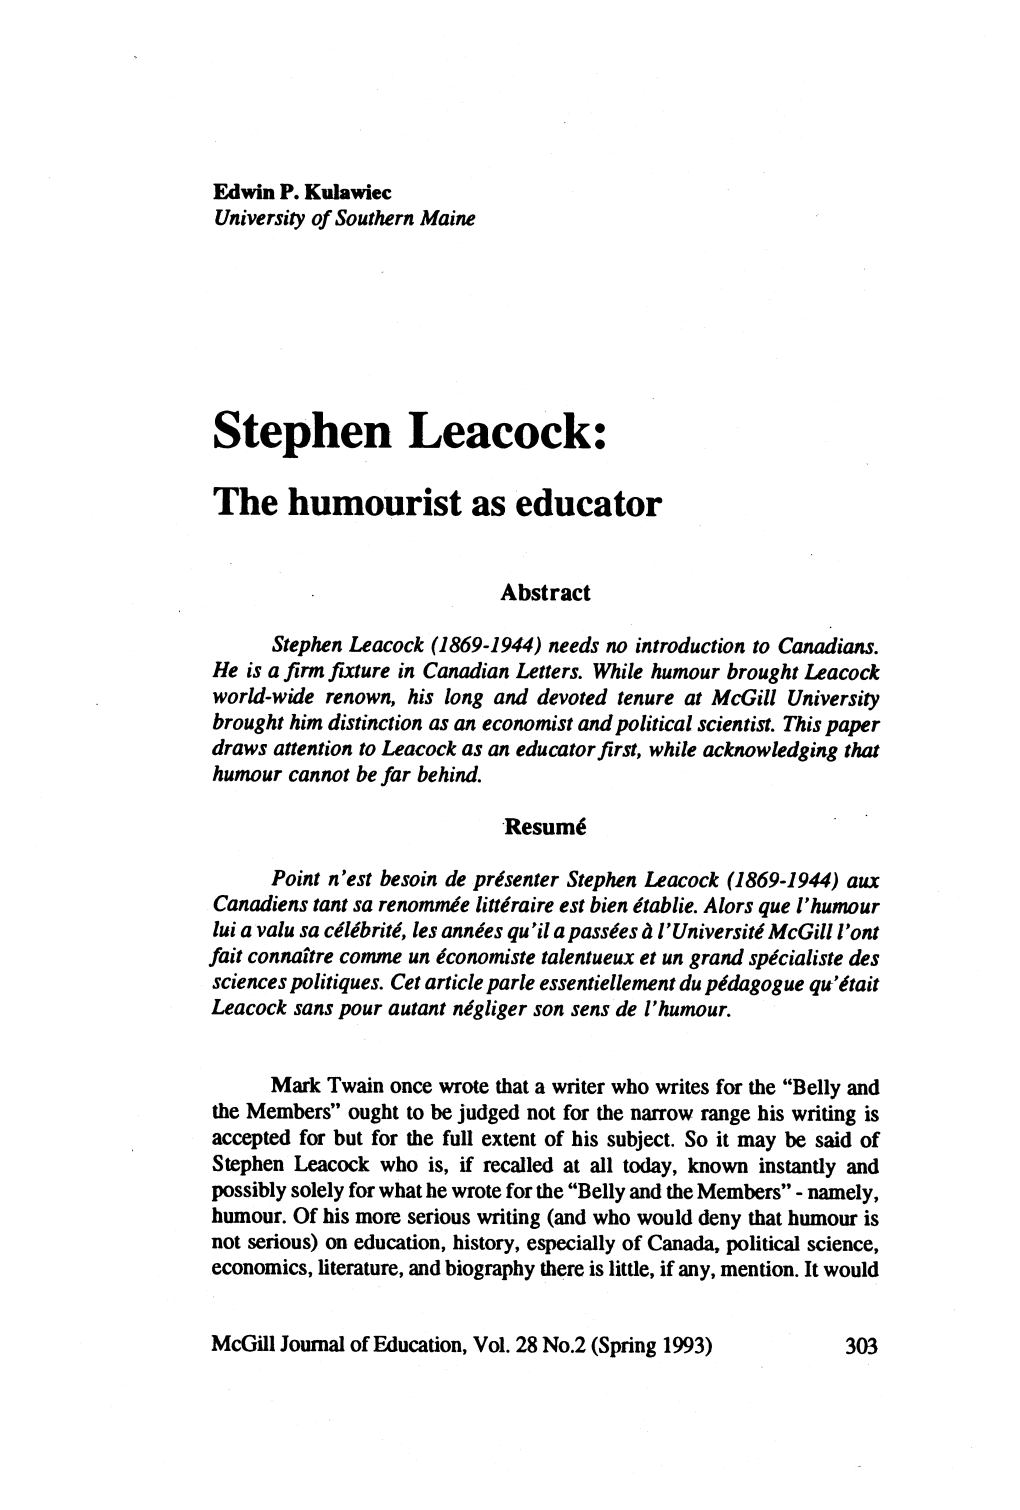 Stephen Leacock: the Humourist As Educator